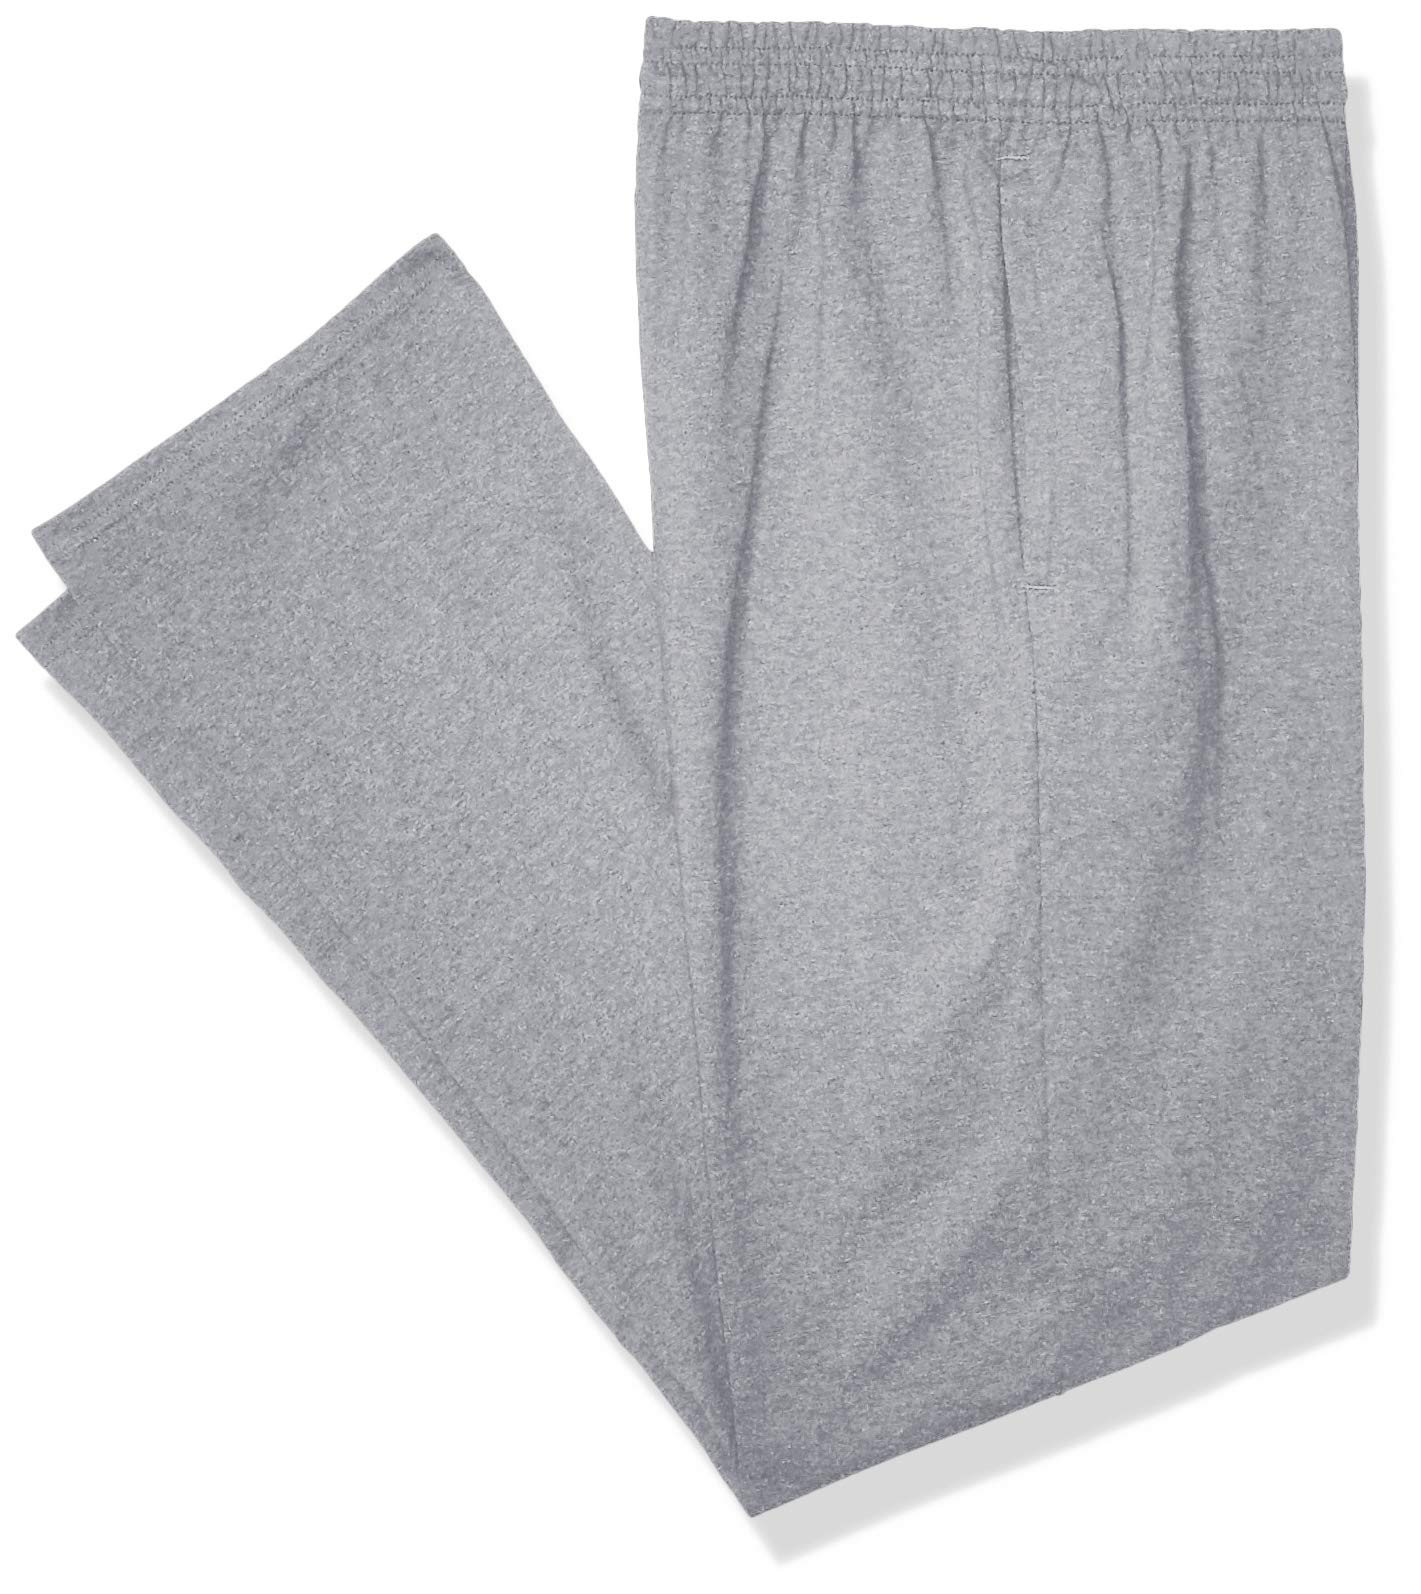 Hanes Essentials Sweatpants, Men’s Cotton Jersey Pants with Pockets, 33”